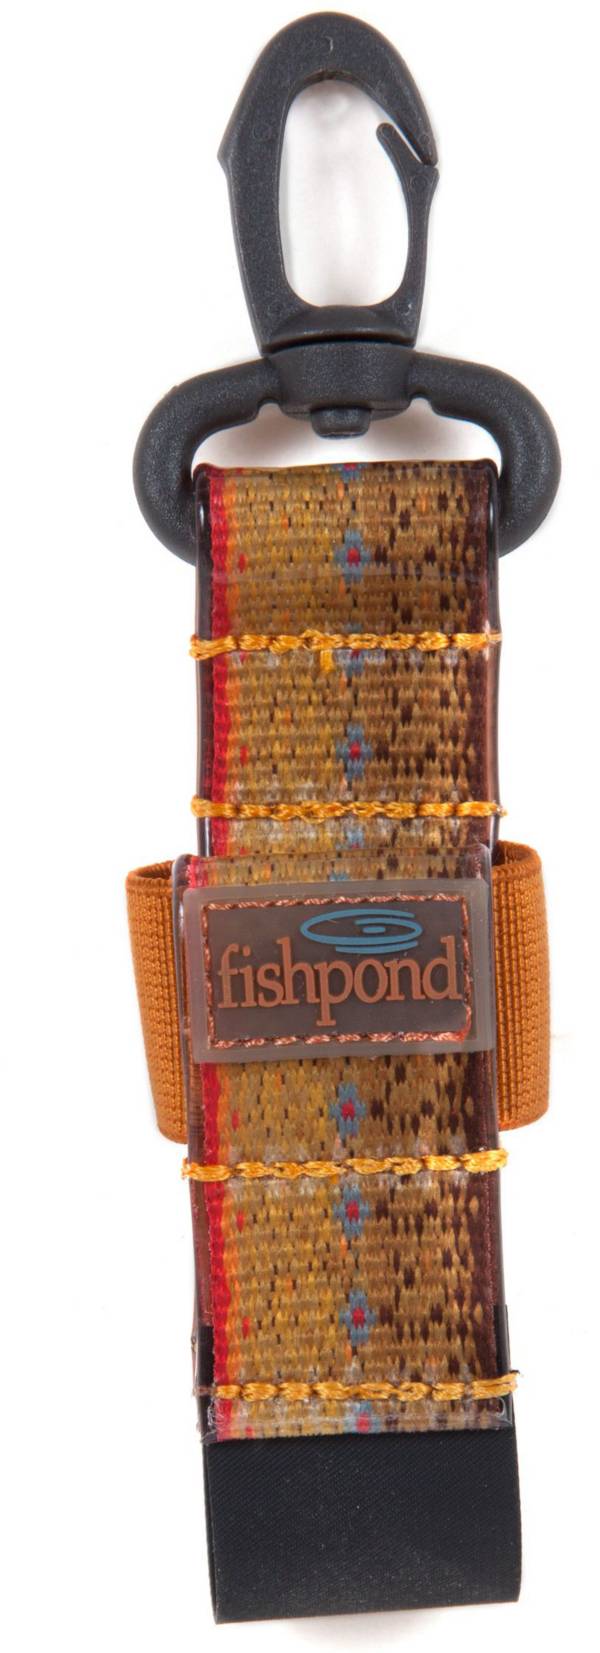 fishpond Floatant Bottle Holder product image